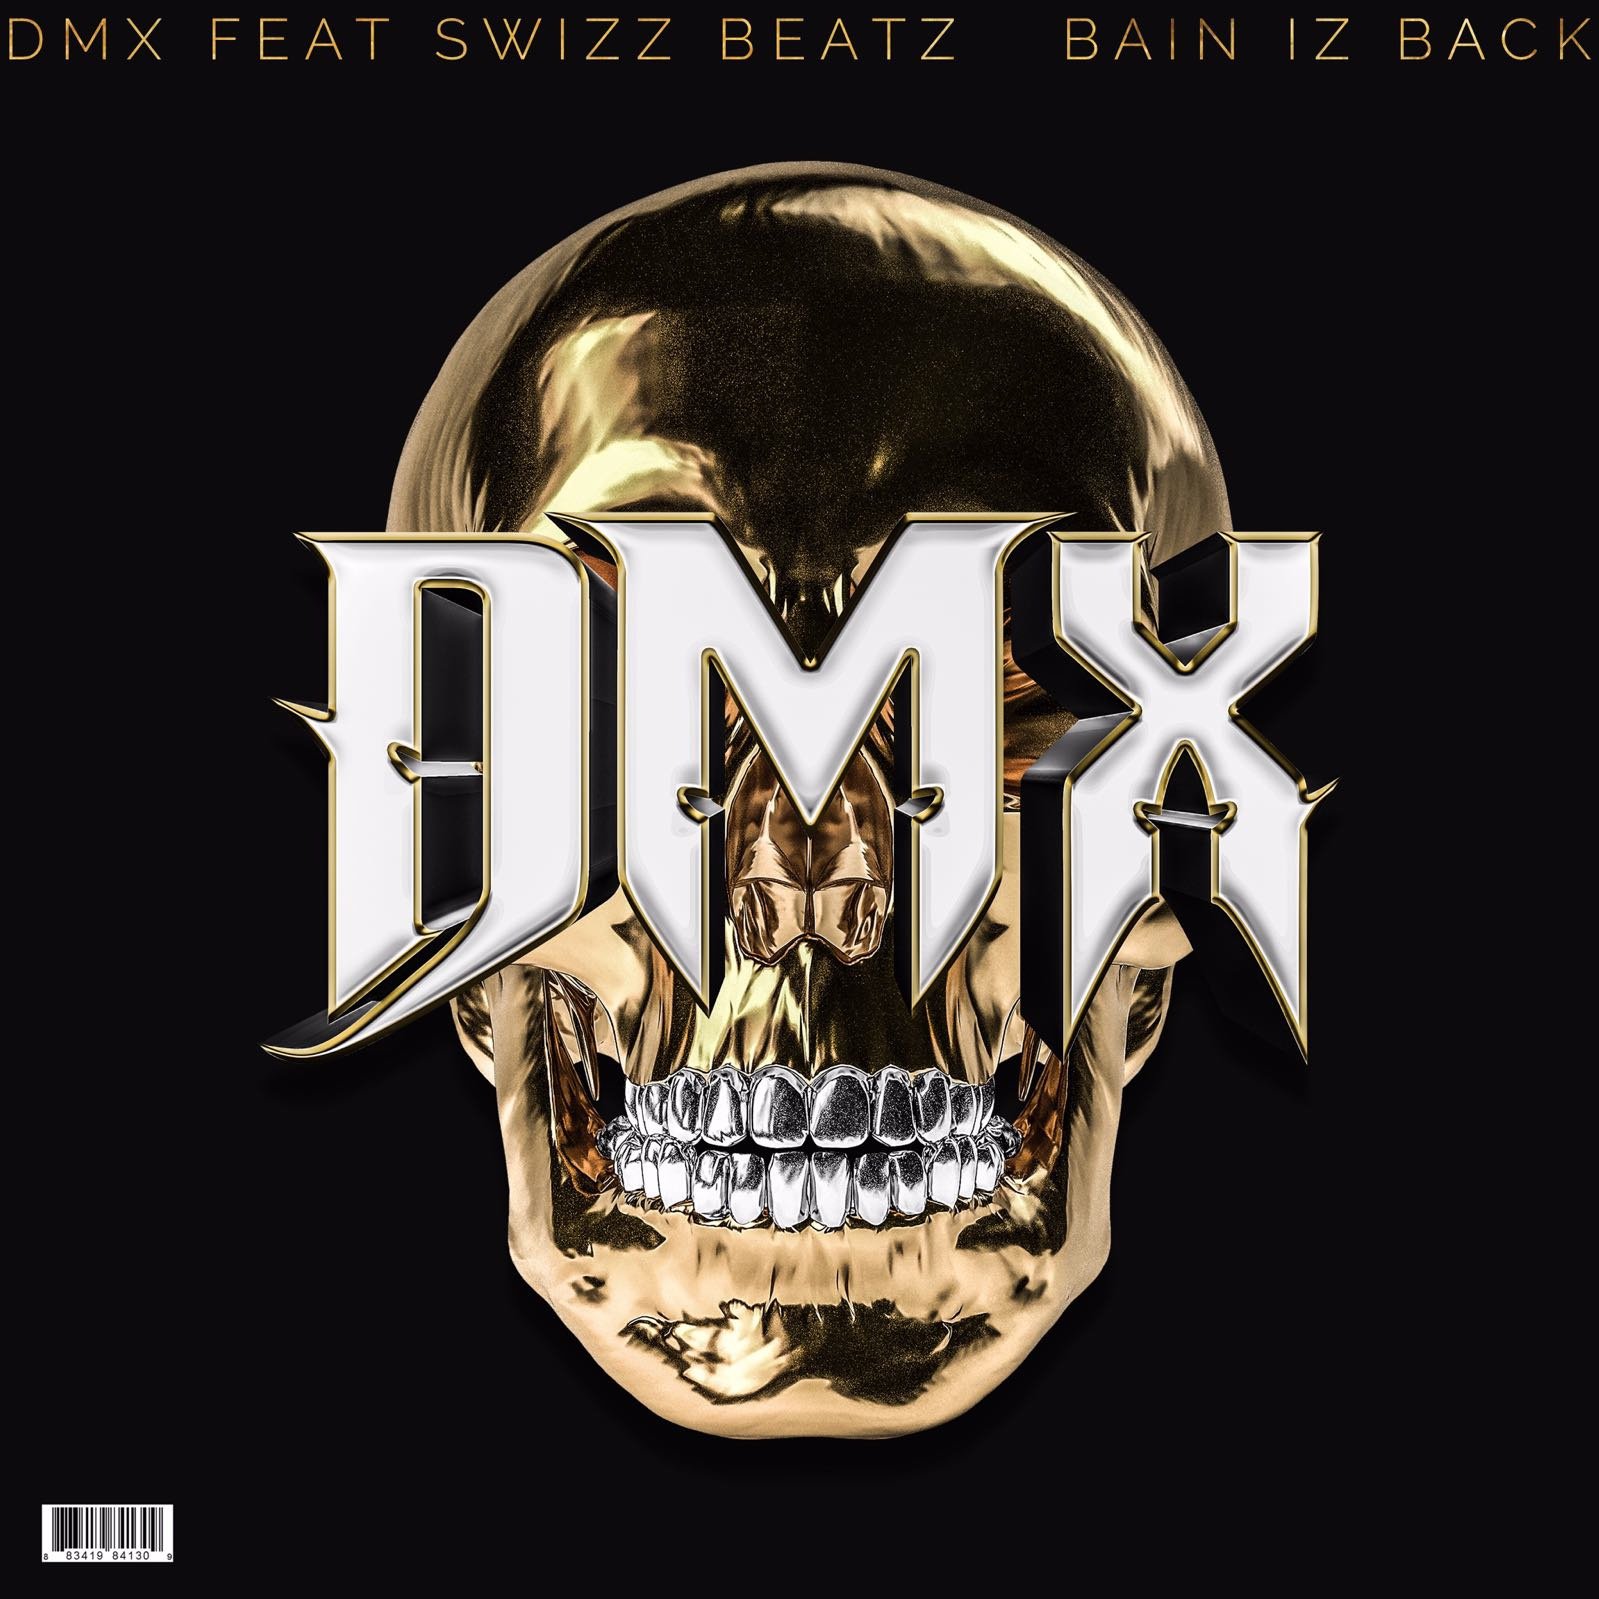 dmx bain iz back new song